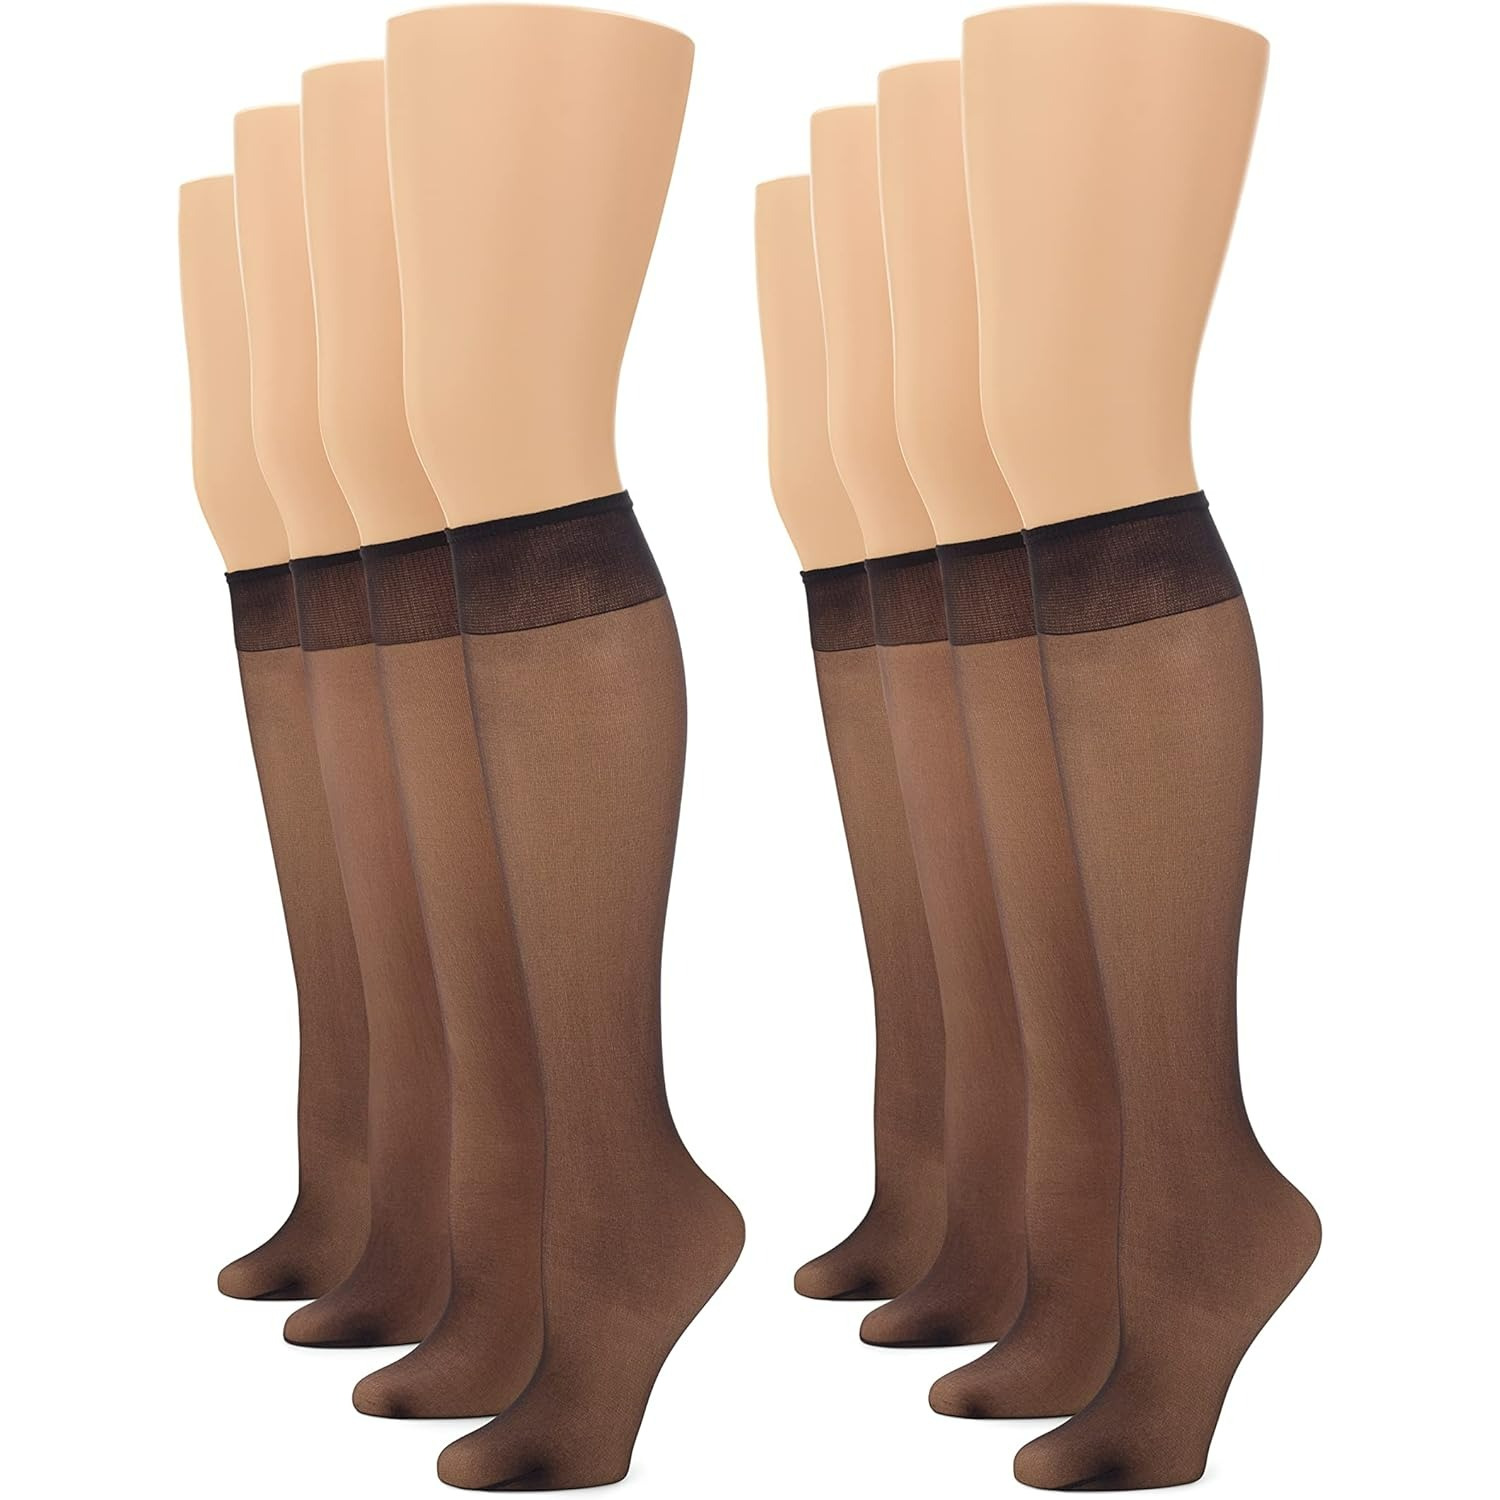 

8 Pairs Solid Sheer Calf Socks, Hot Ultra-thin Knee High Socks, Women's Stockings & Hosiery